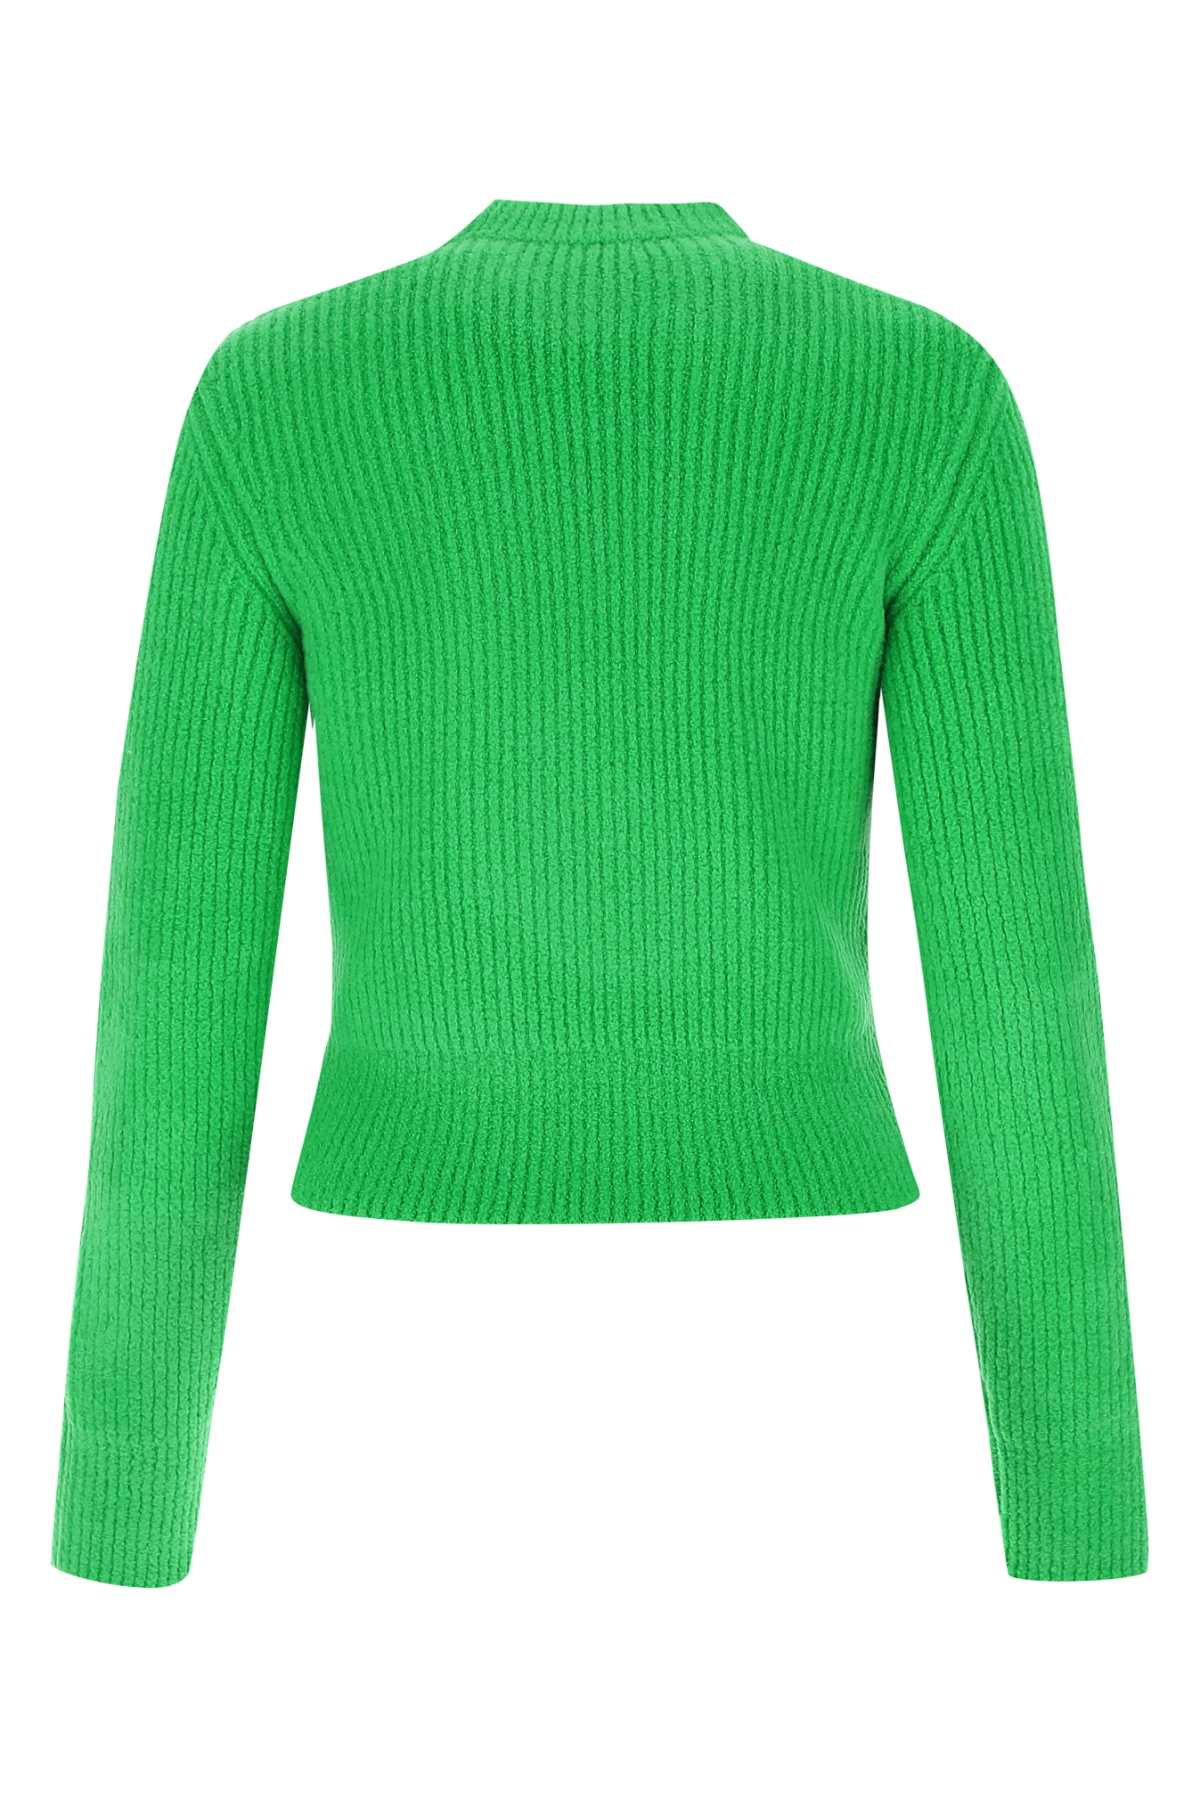 Alexander Wang T Green Stretch Wool Blend Sweater In 310